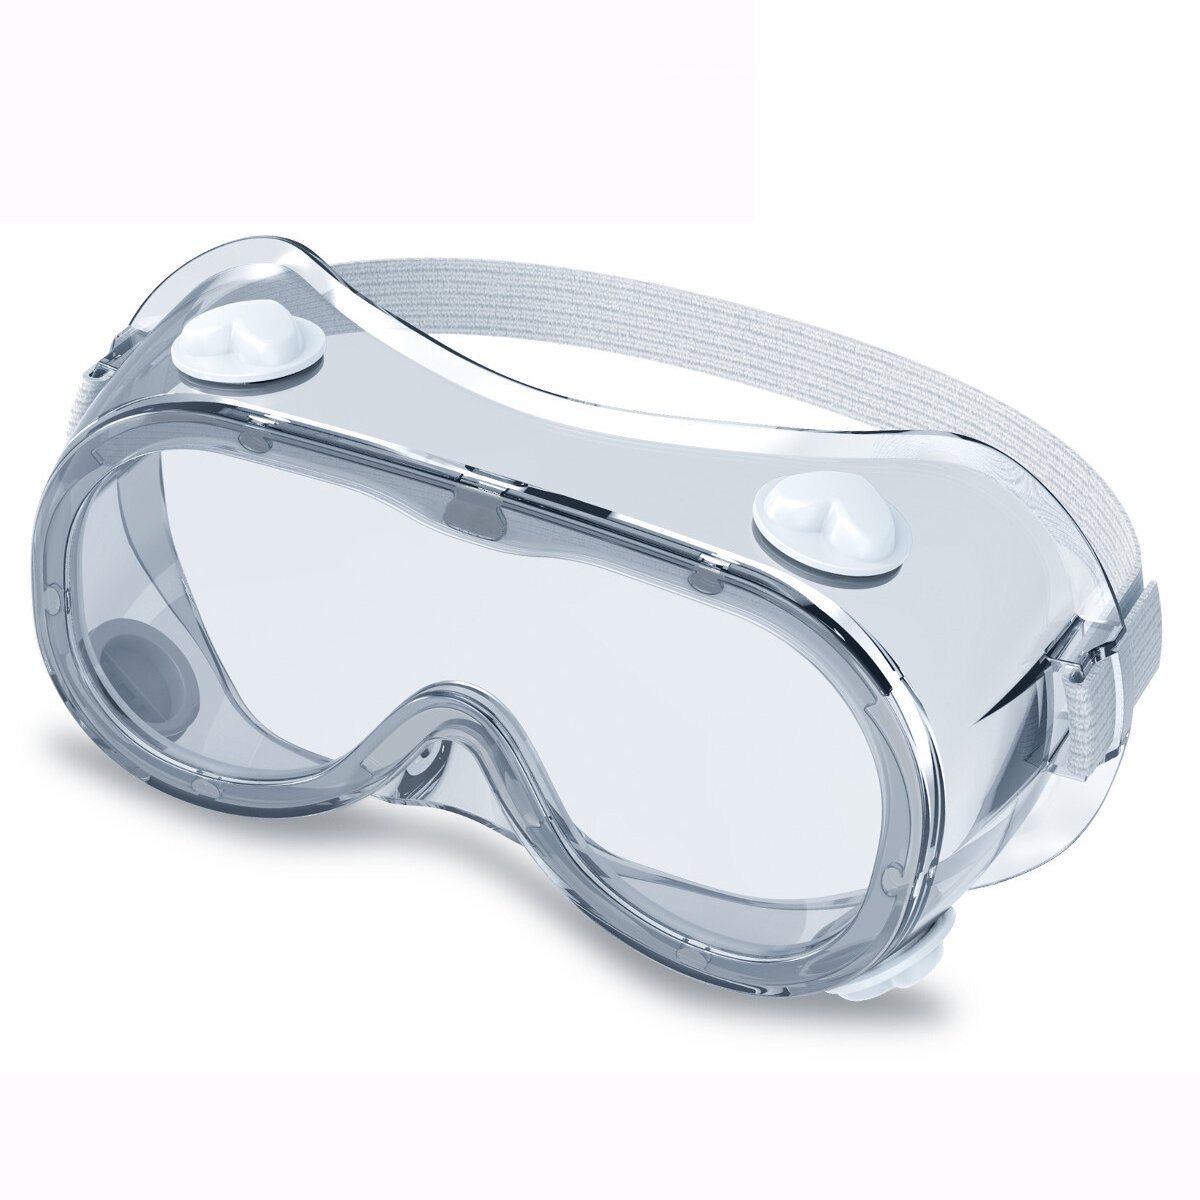 183 x 80 mm transparante veiligheidsbril Ogenbeschermer veiligheidsbril met waterdichte en schokbest